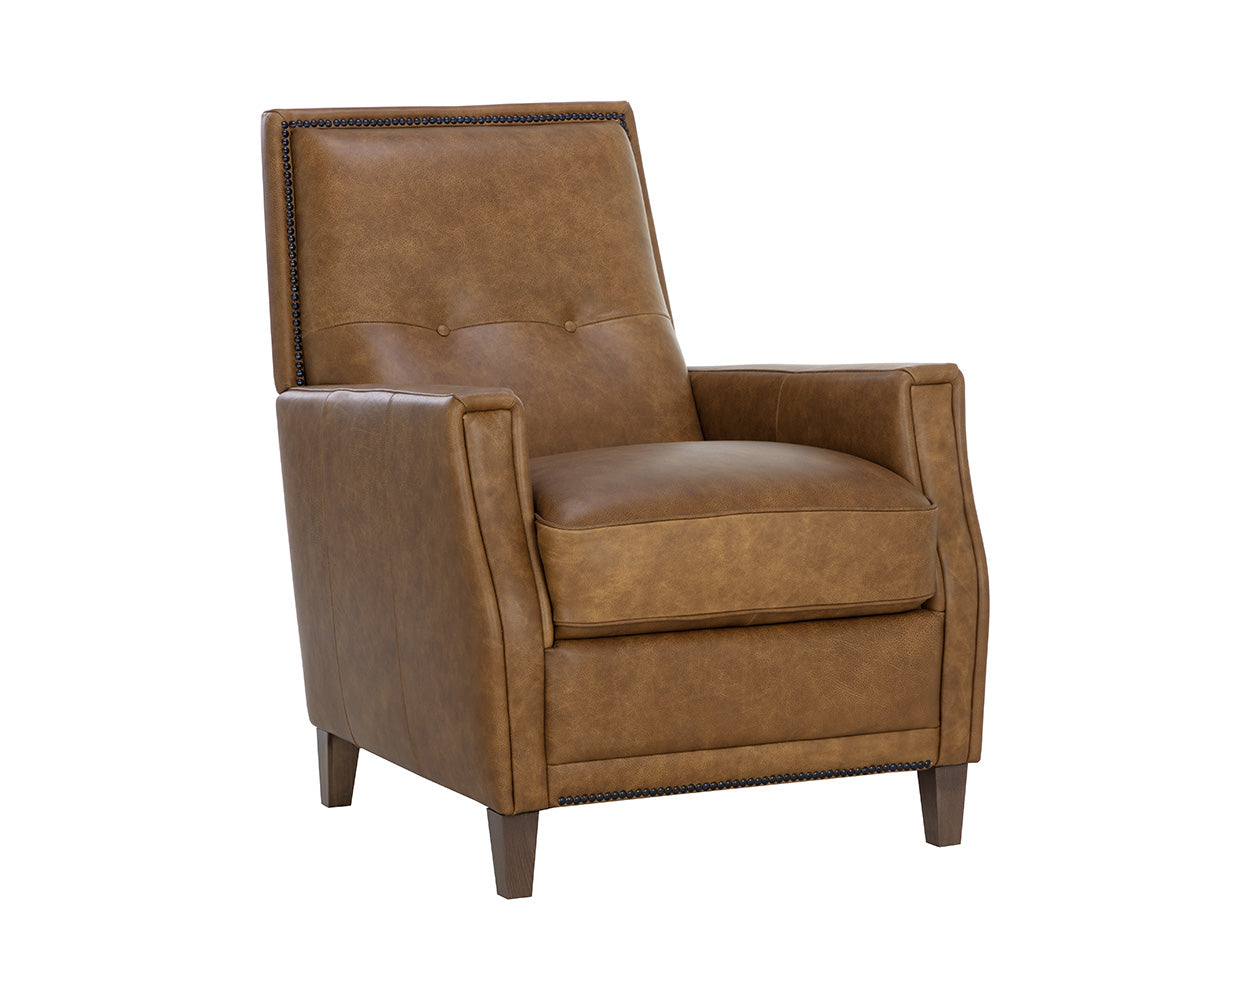 Florenzi Lounge Chair